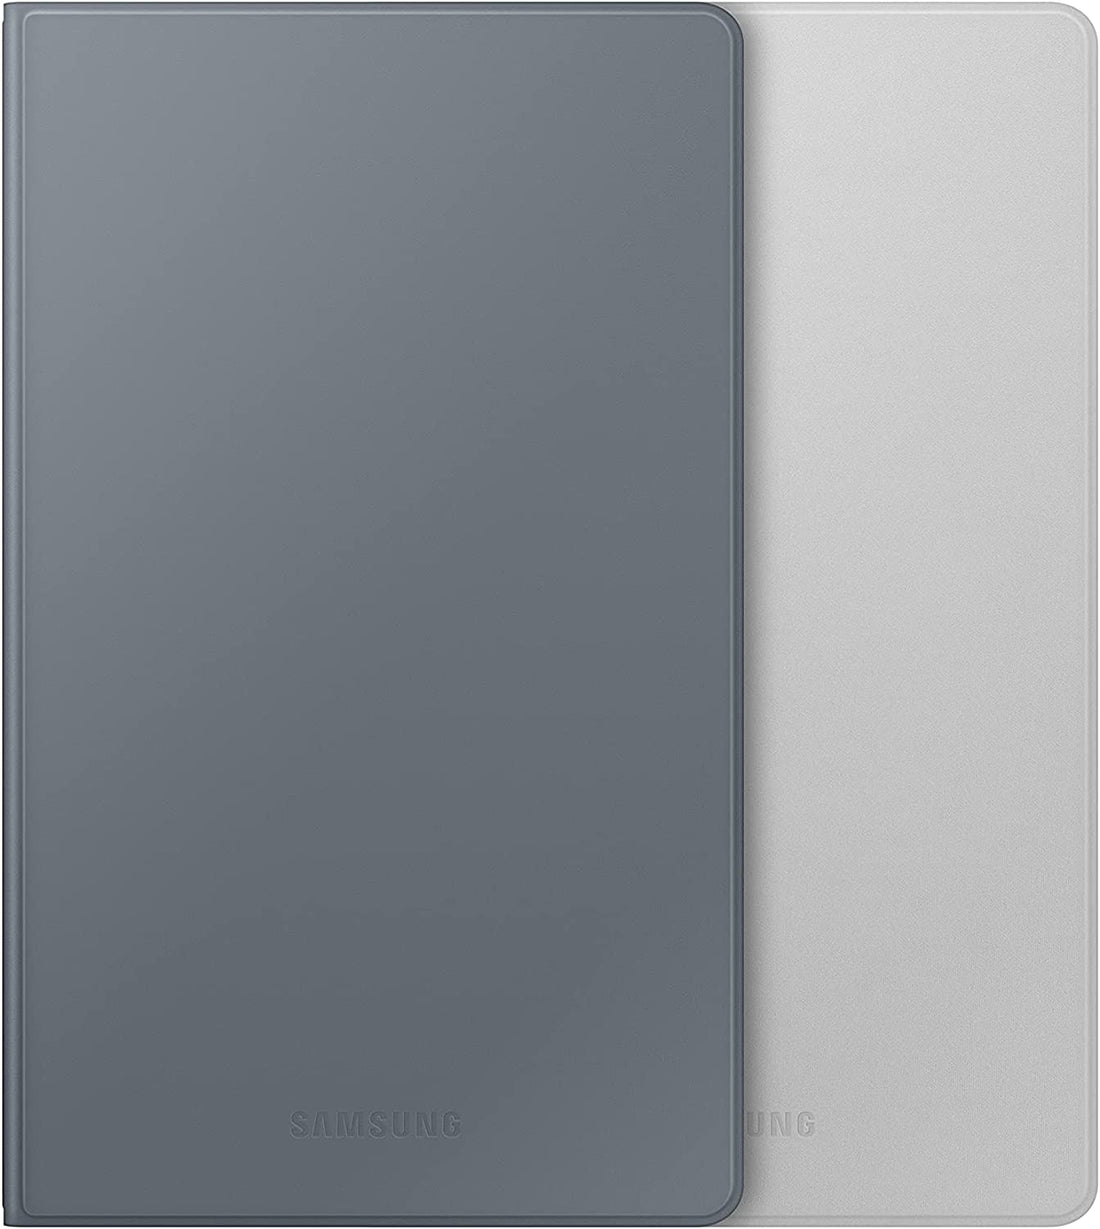 Samsung Galaxy Tab A7 Lite Bookcover Case  - Dark Gray (Certified Refurbished)